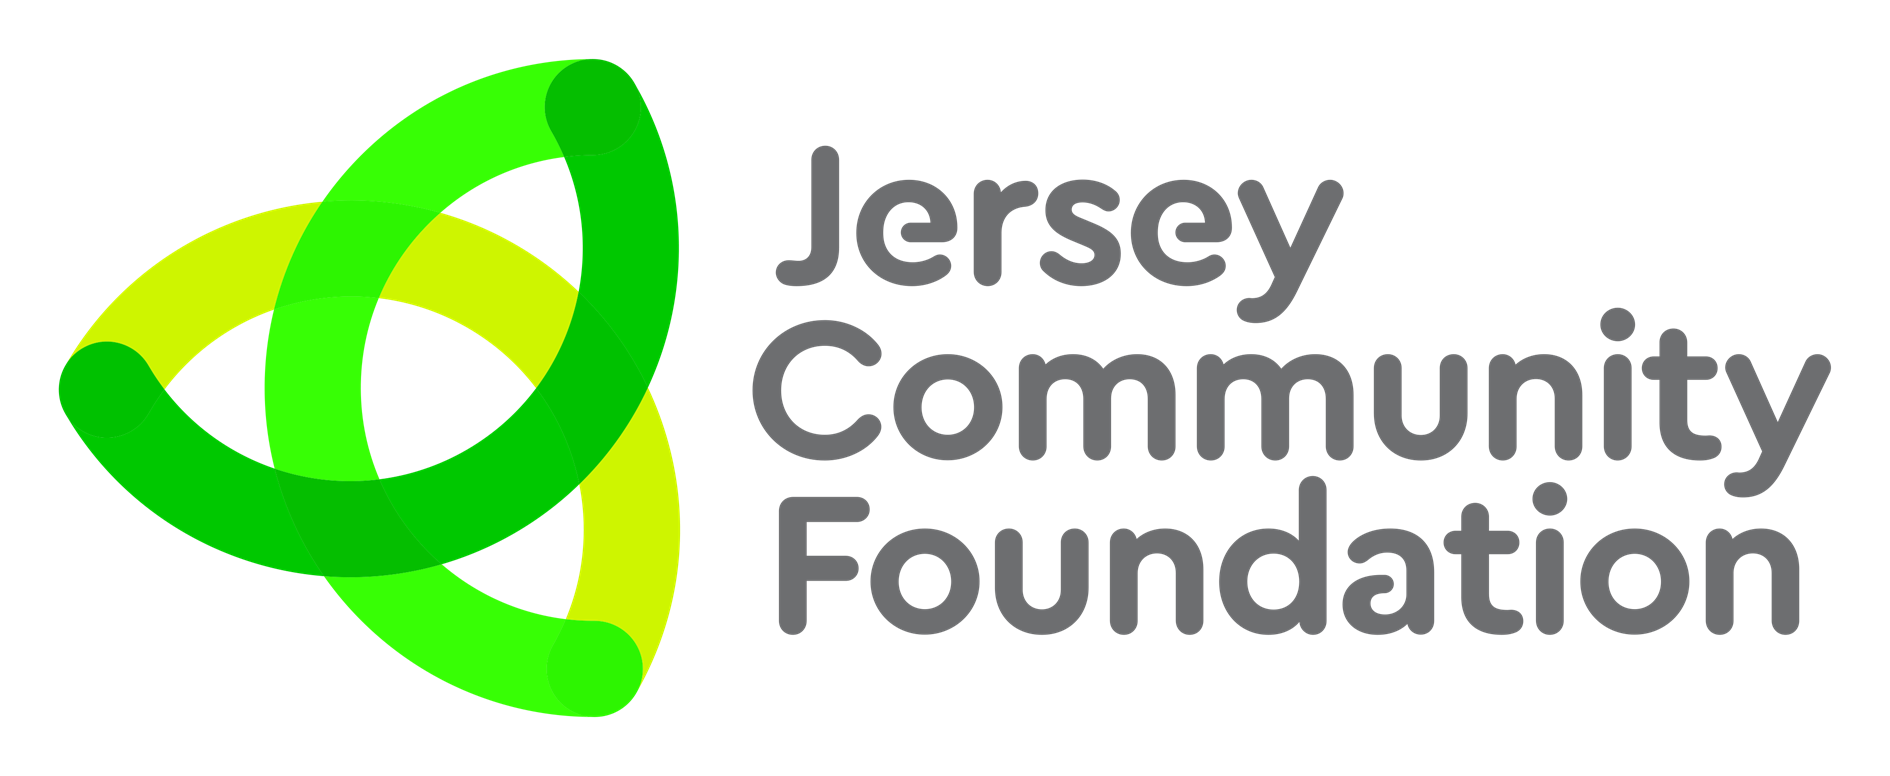 Jersey Community Foundation Image